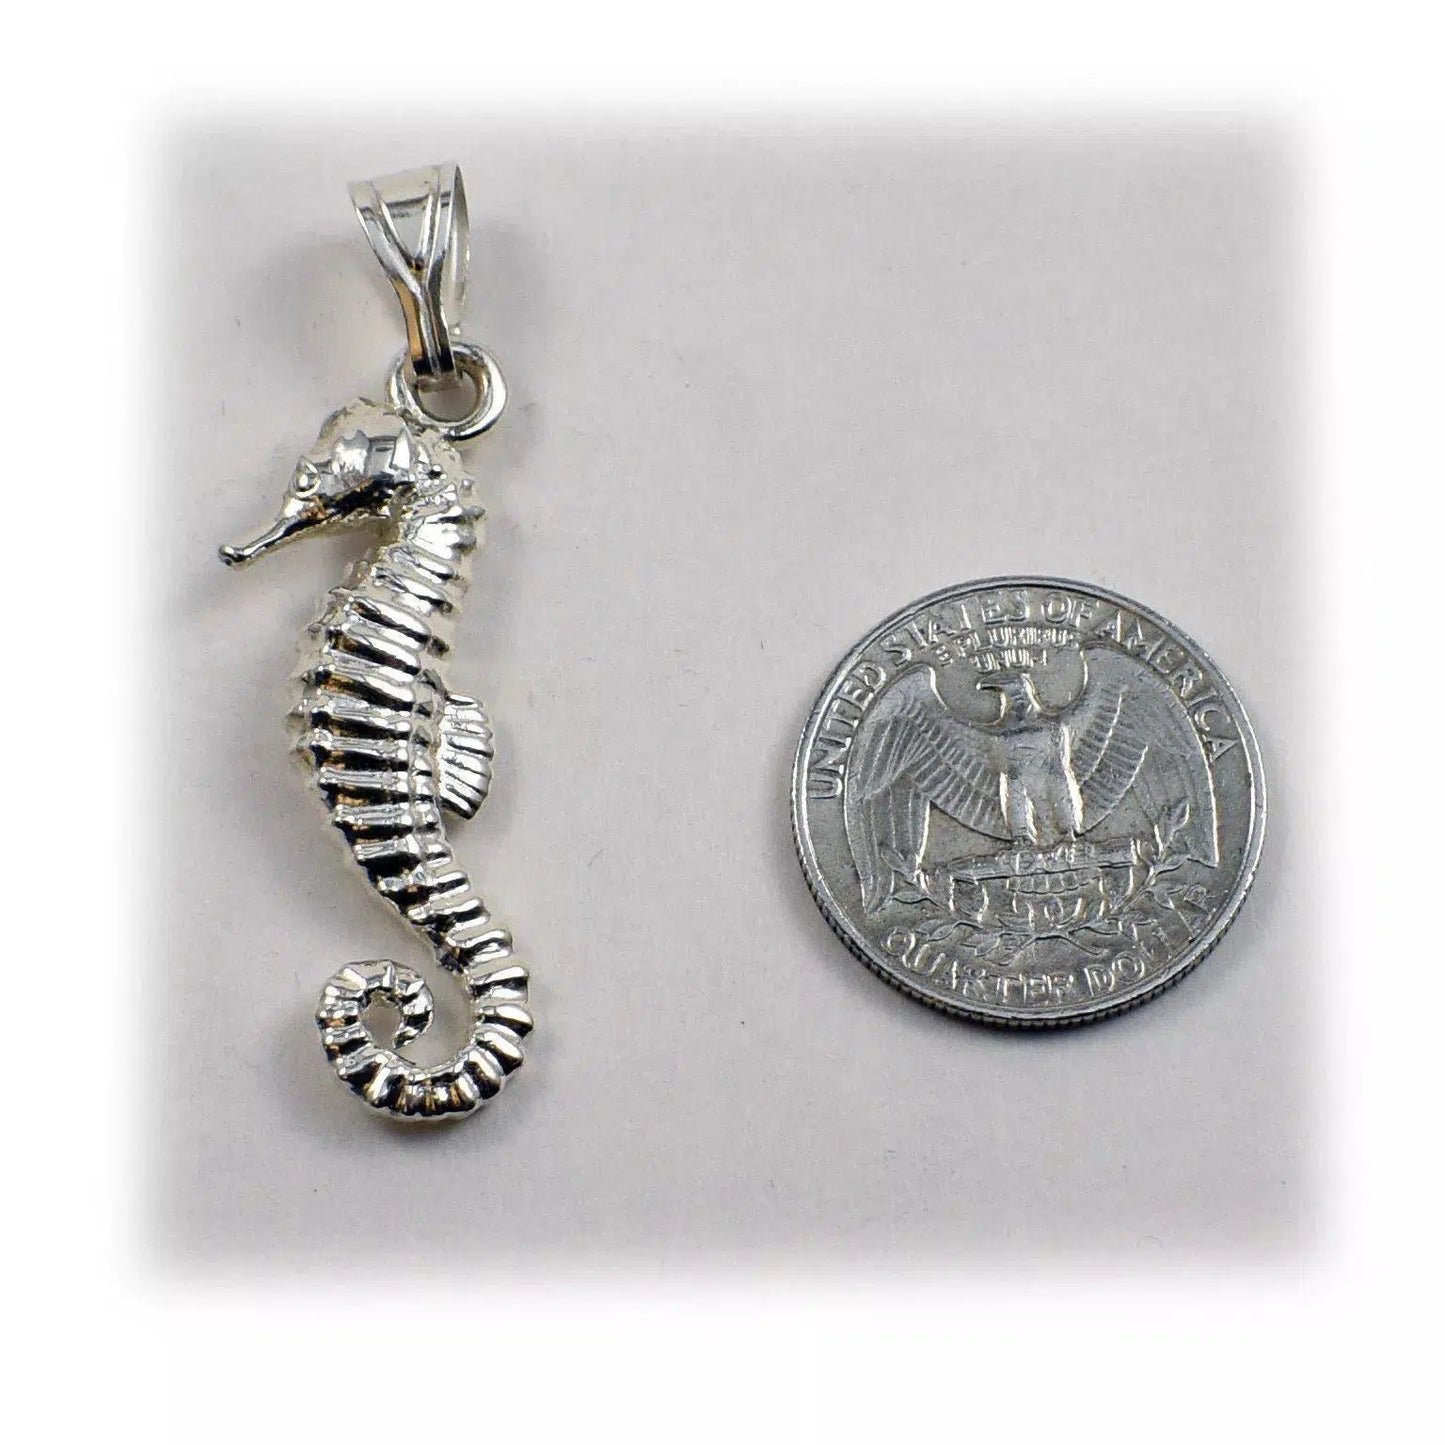 Seahorse Pendant - Large